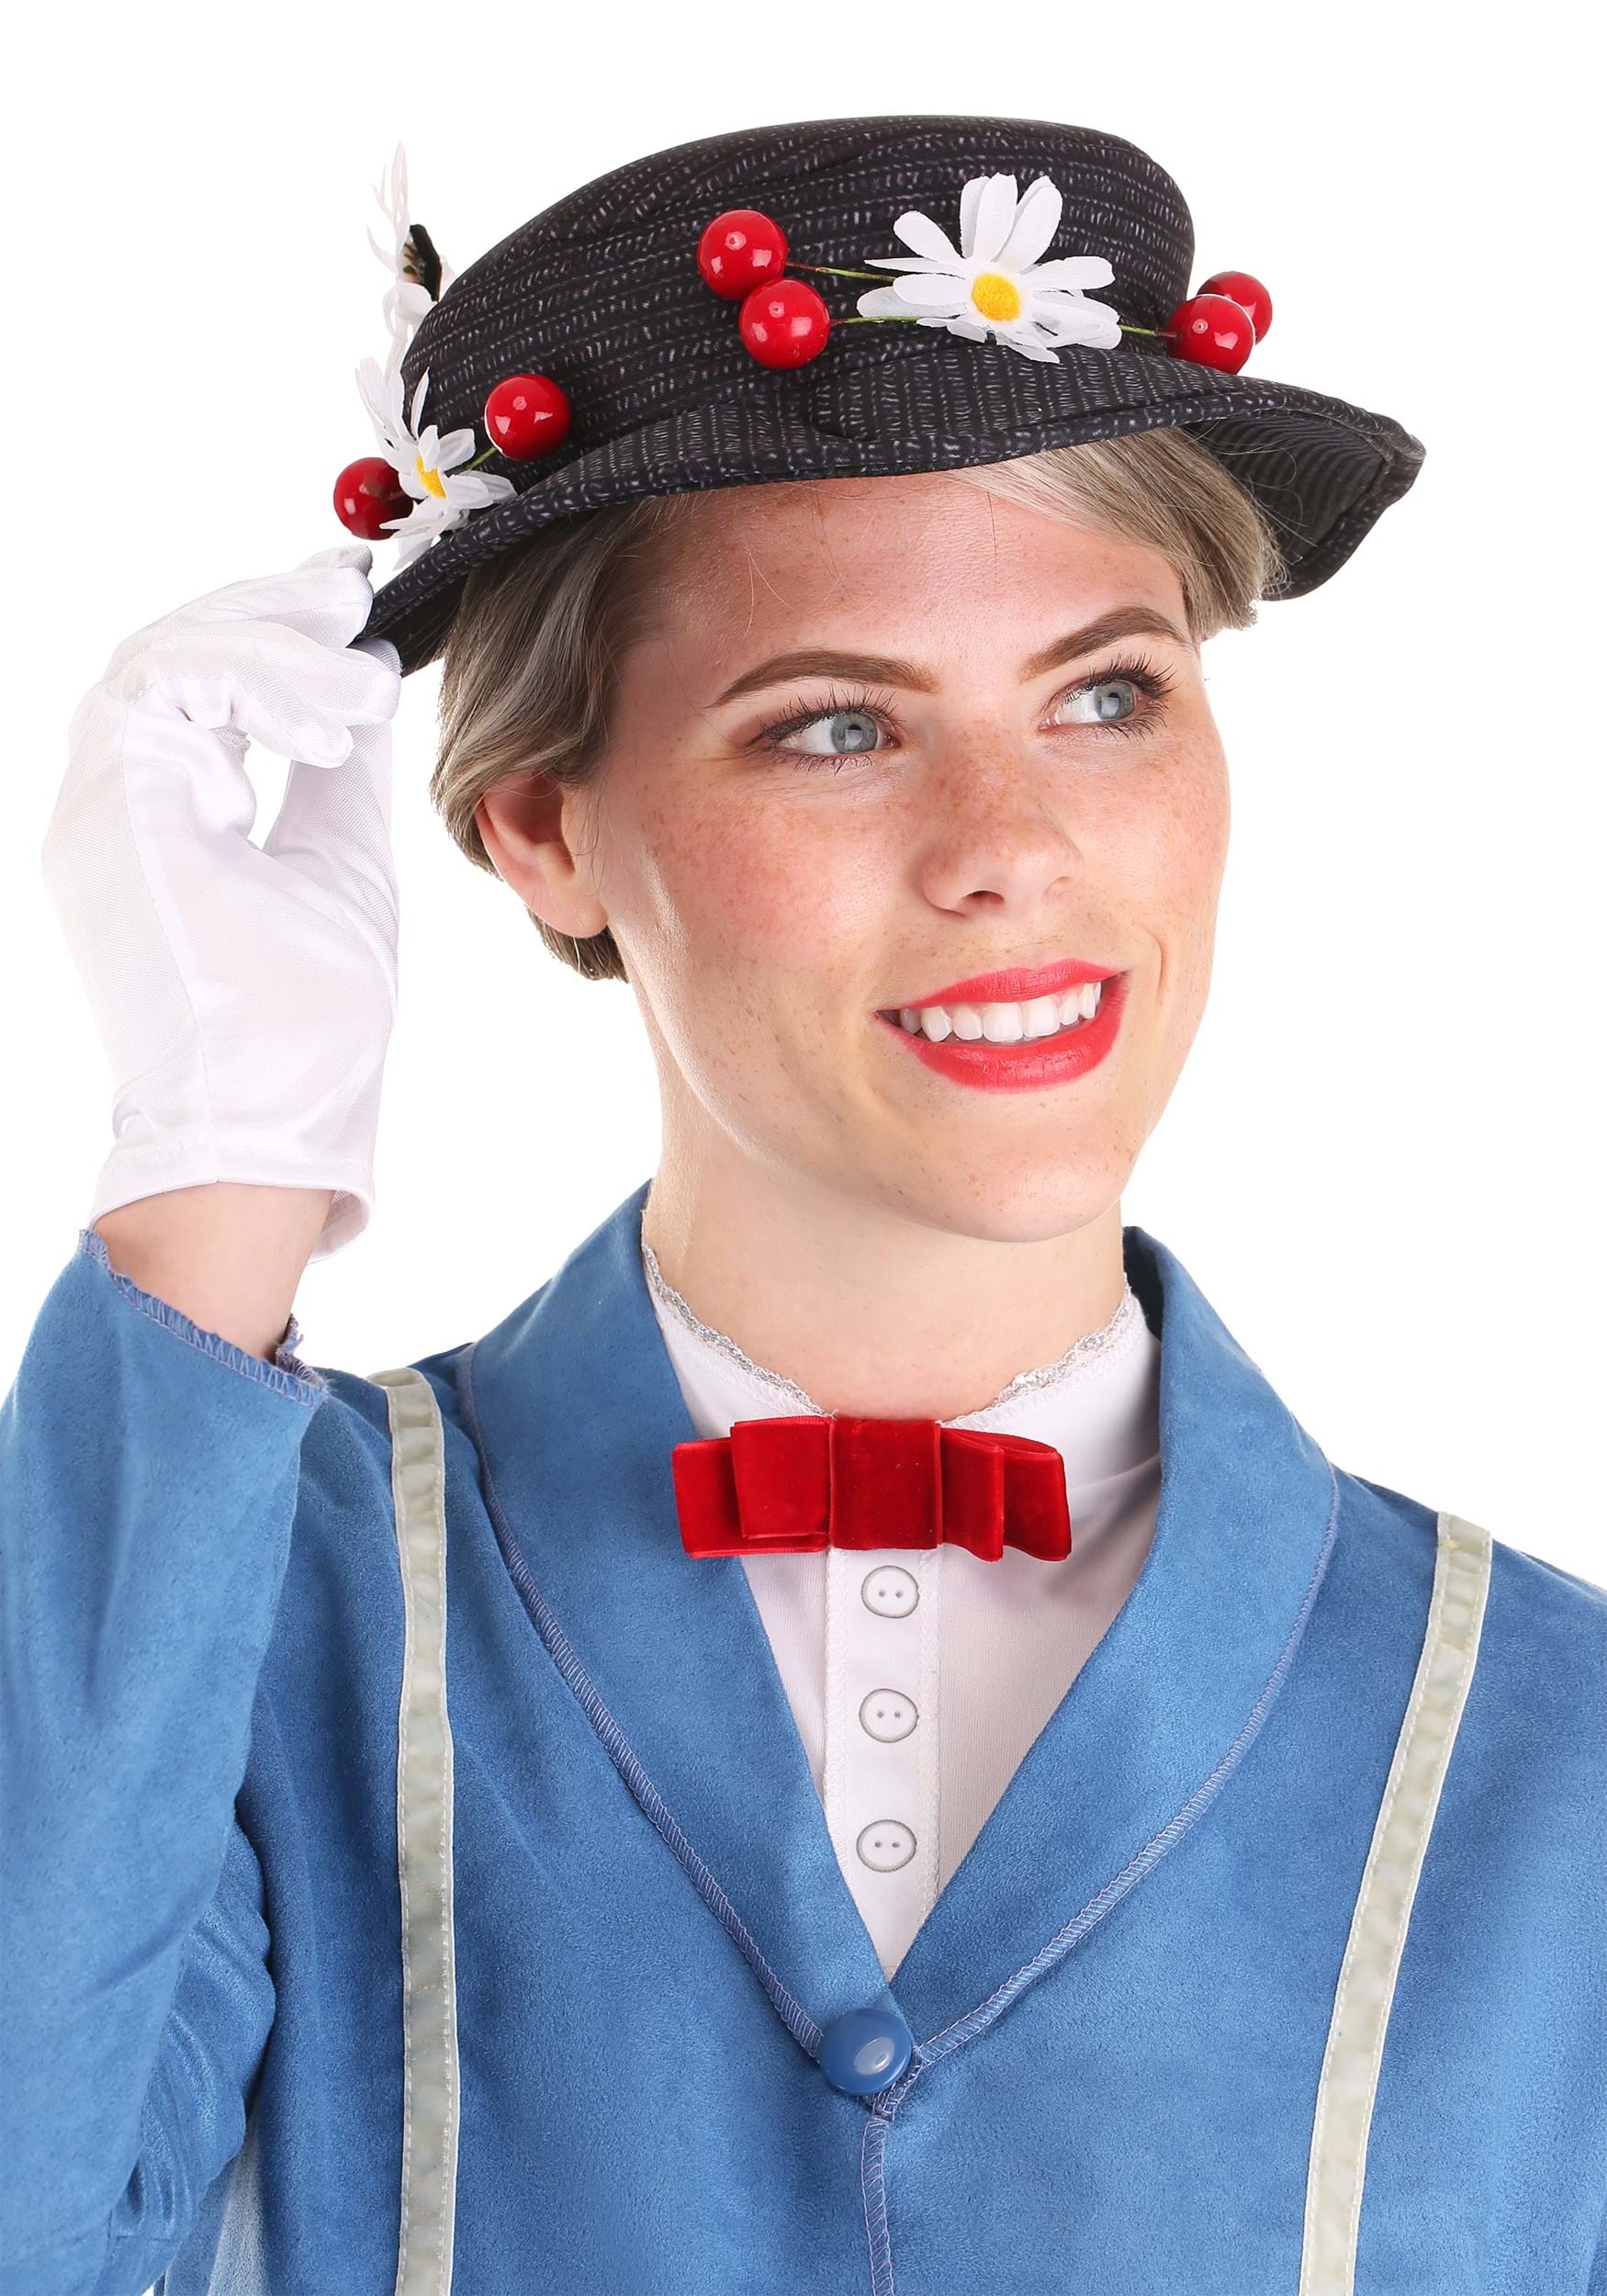 Mary Poppins Women's Blue Coat Costume